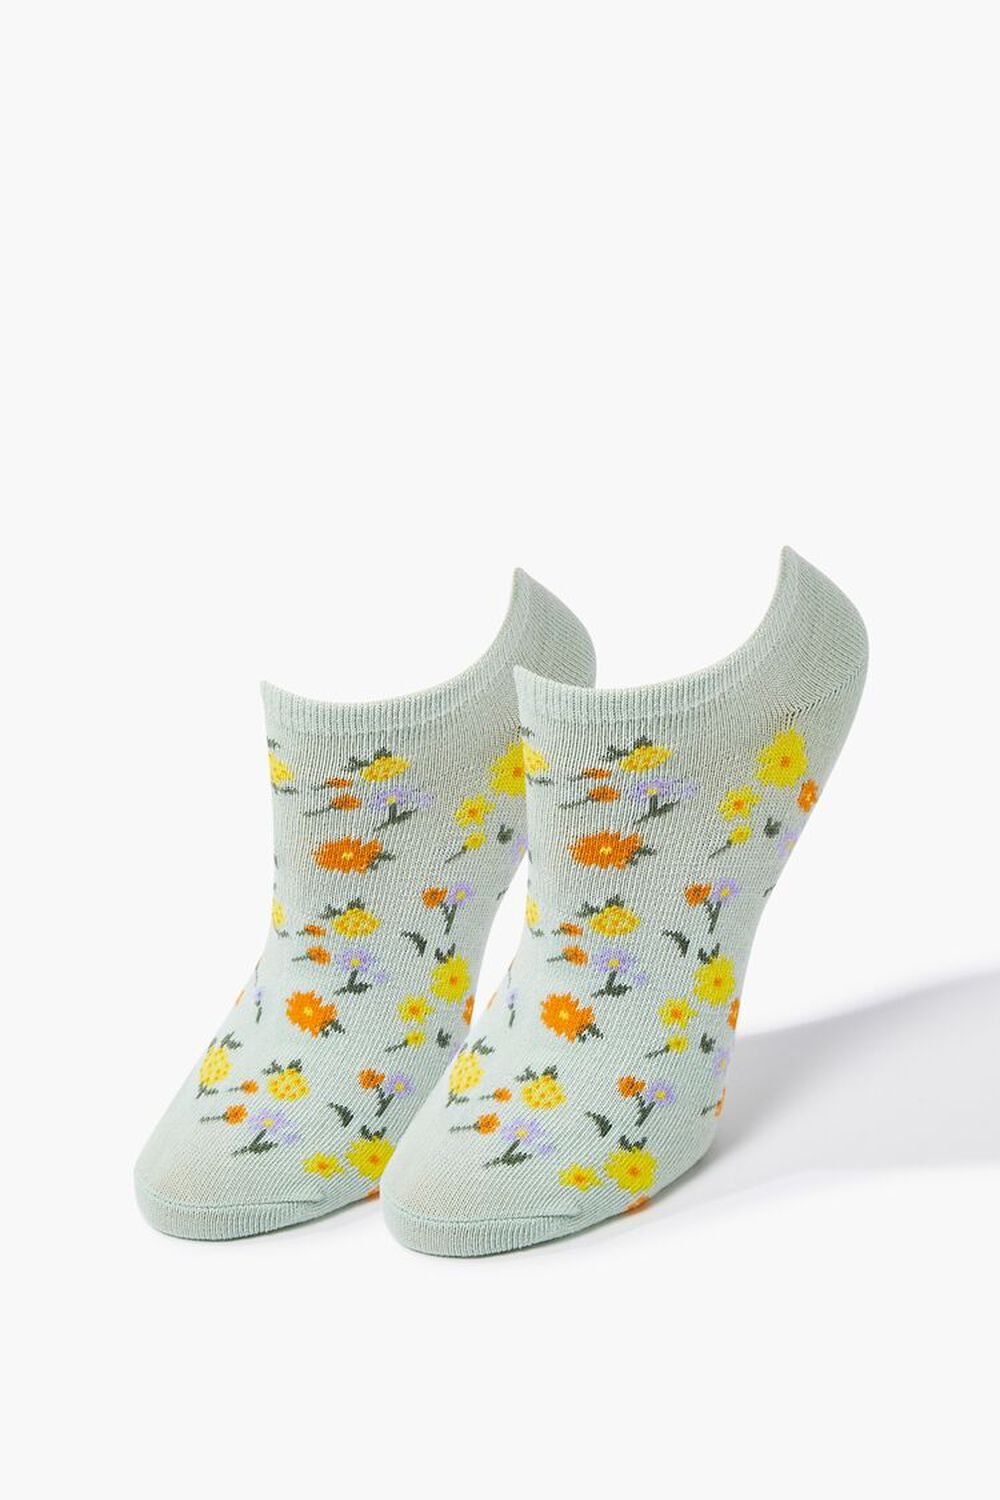 MINT/MULTI Floral Print Ankle Socks, image 1